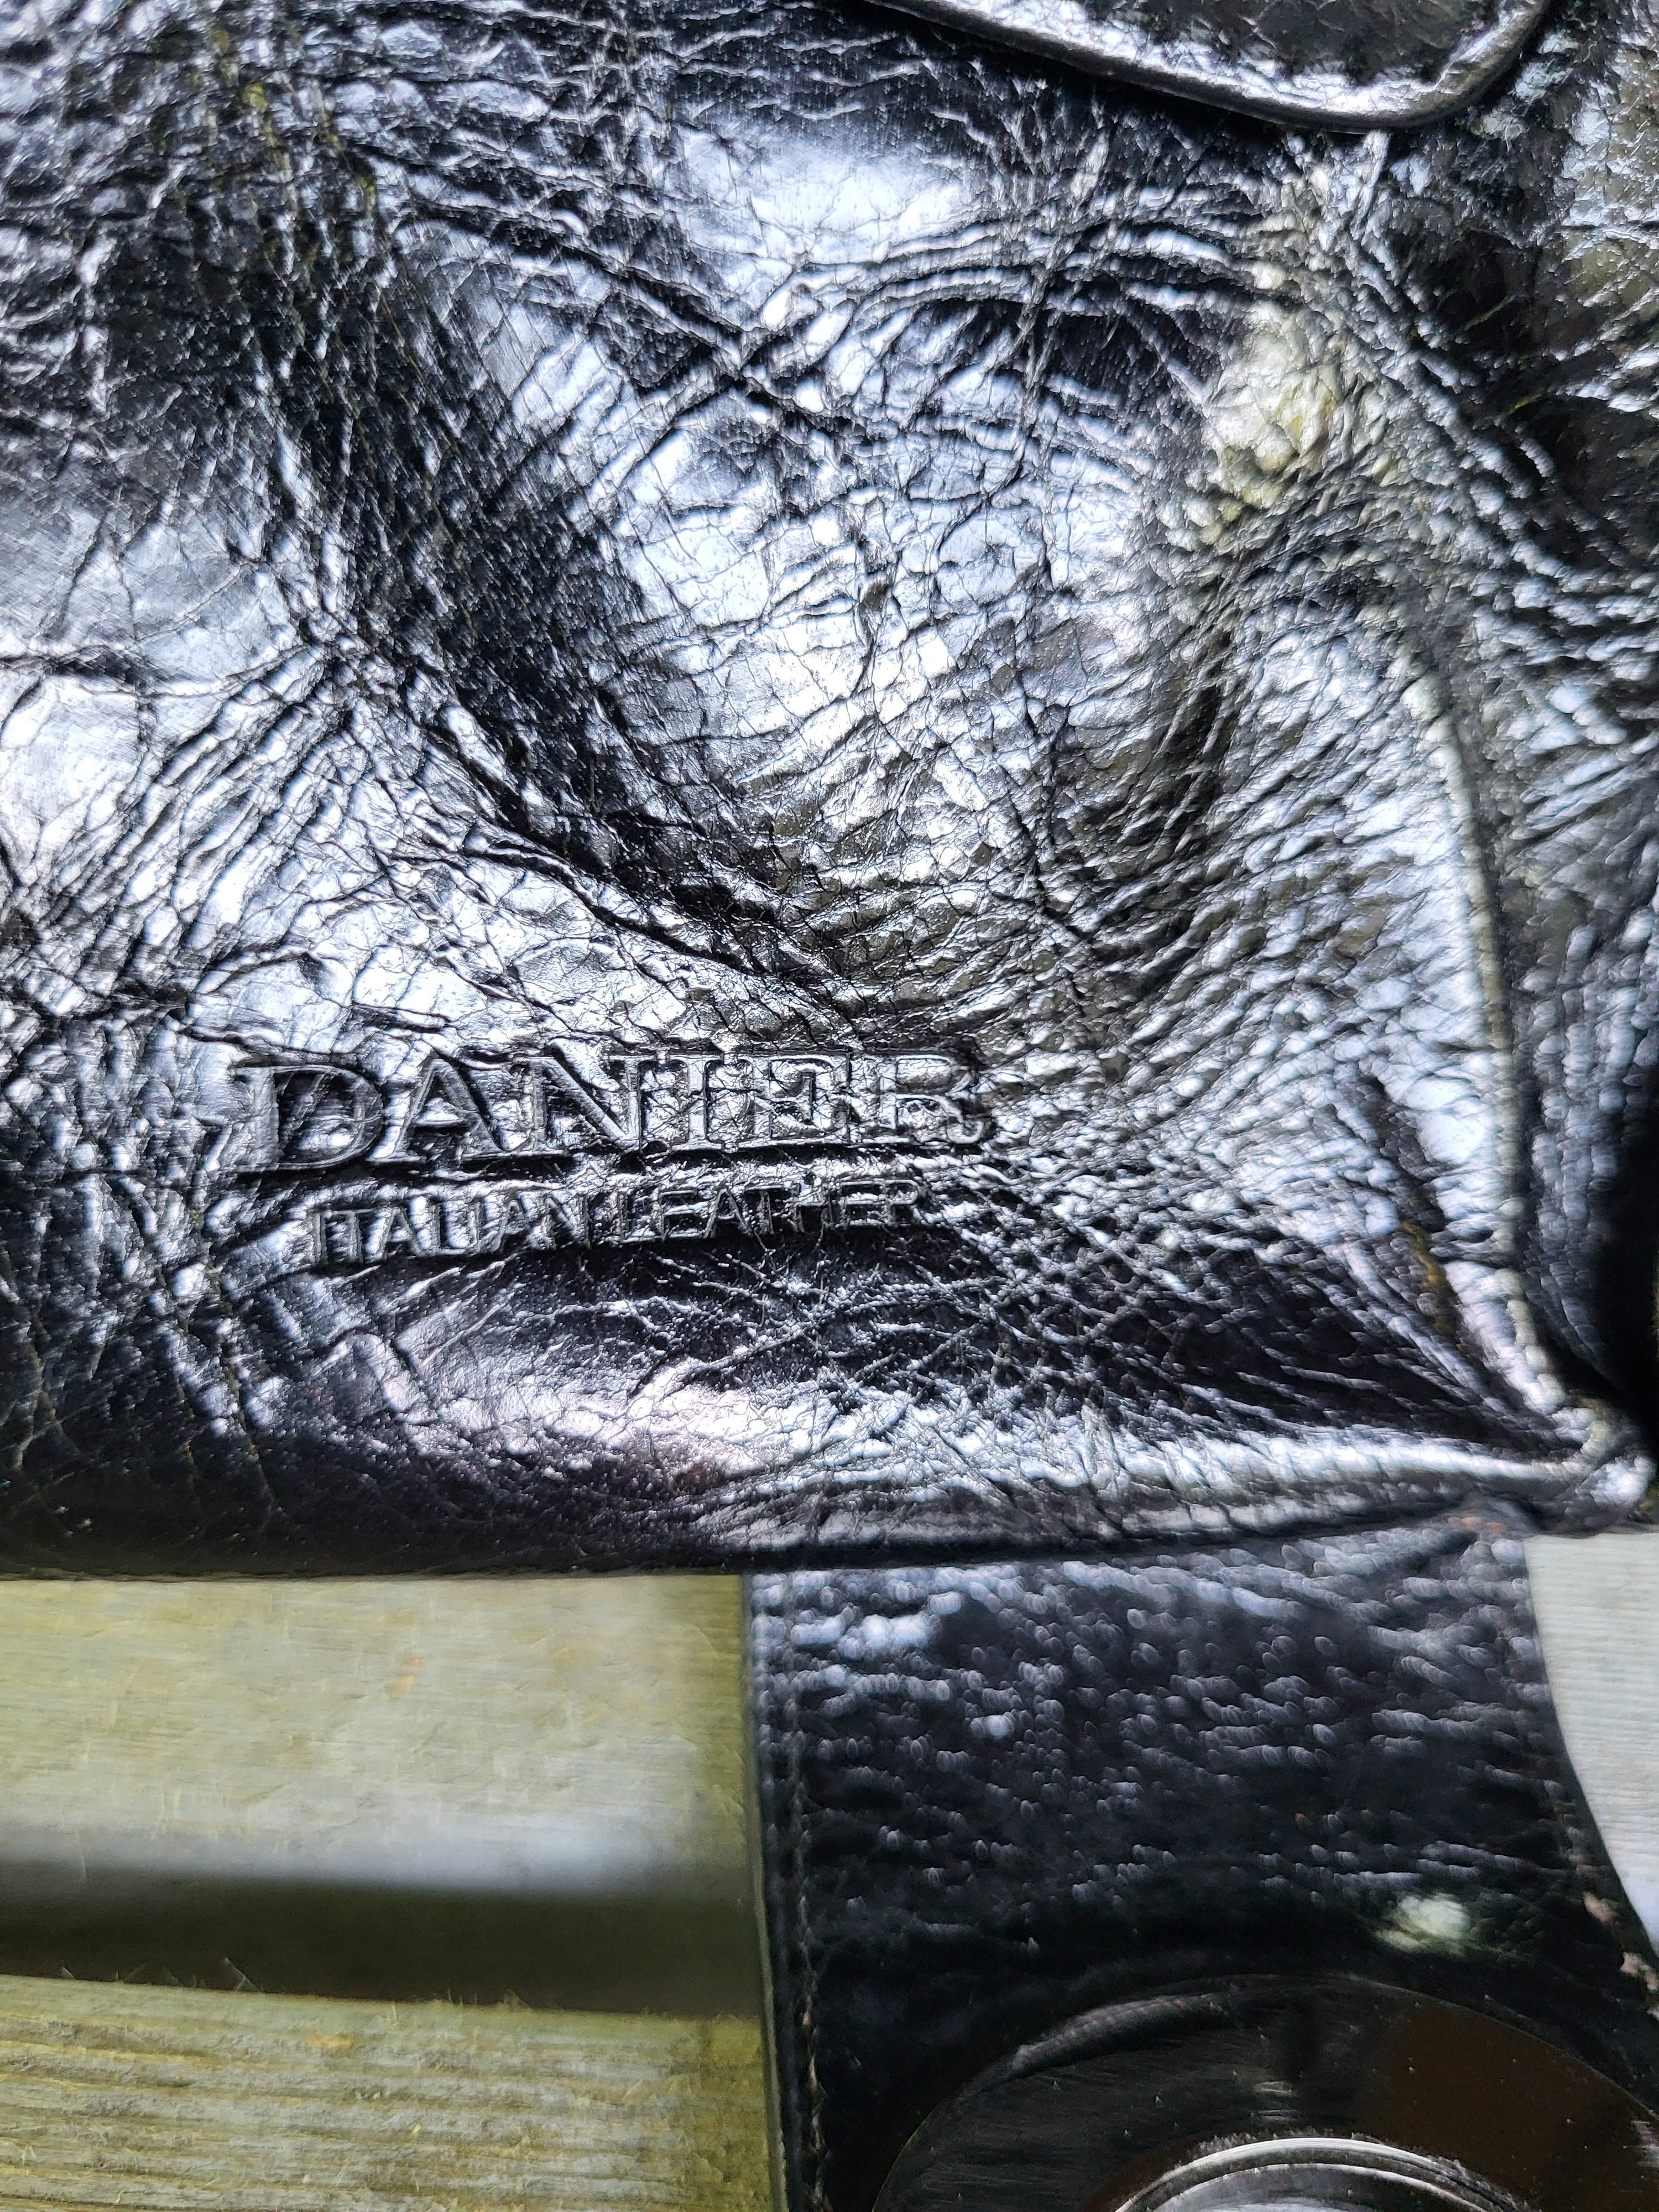 Danier Black Leather Shoulder/Crossbody Bag